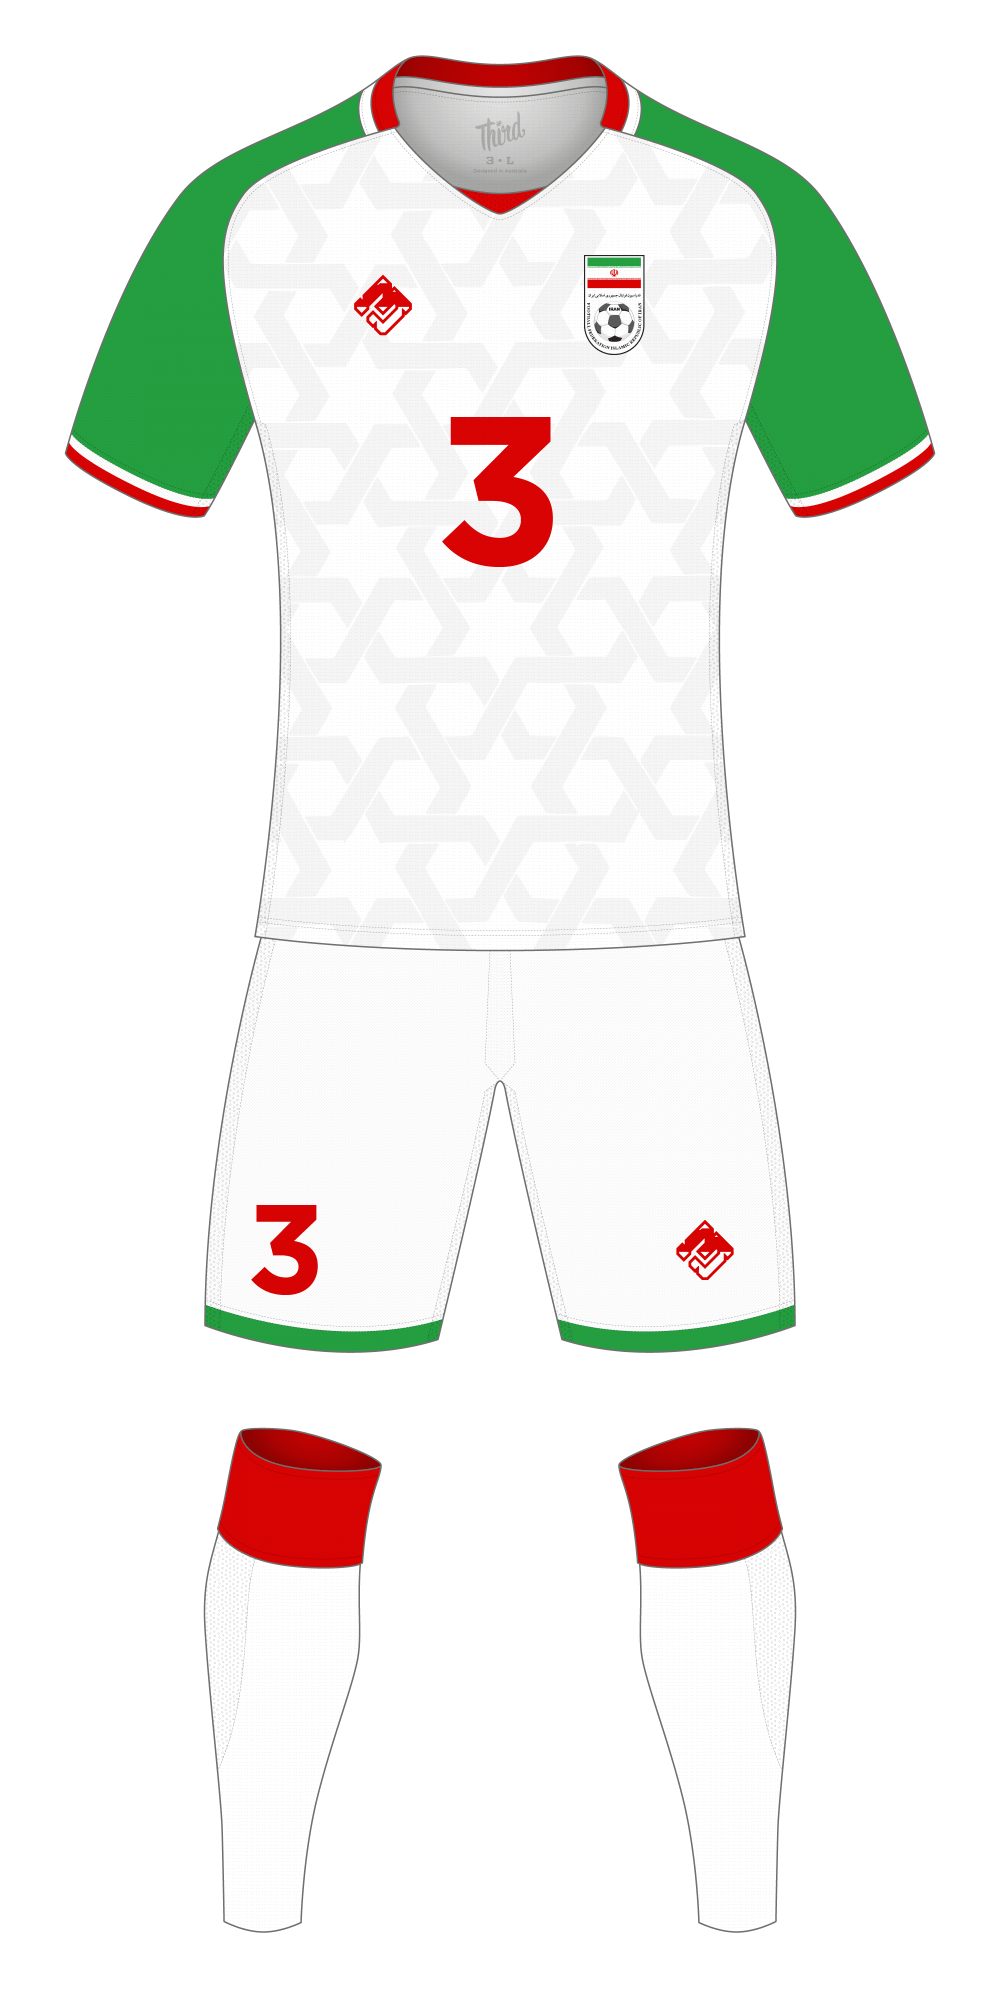 Iran World Cup 2018 concept